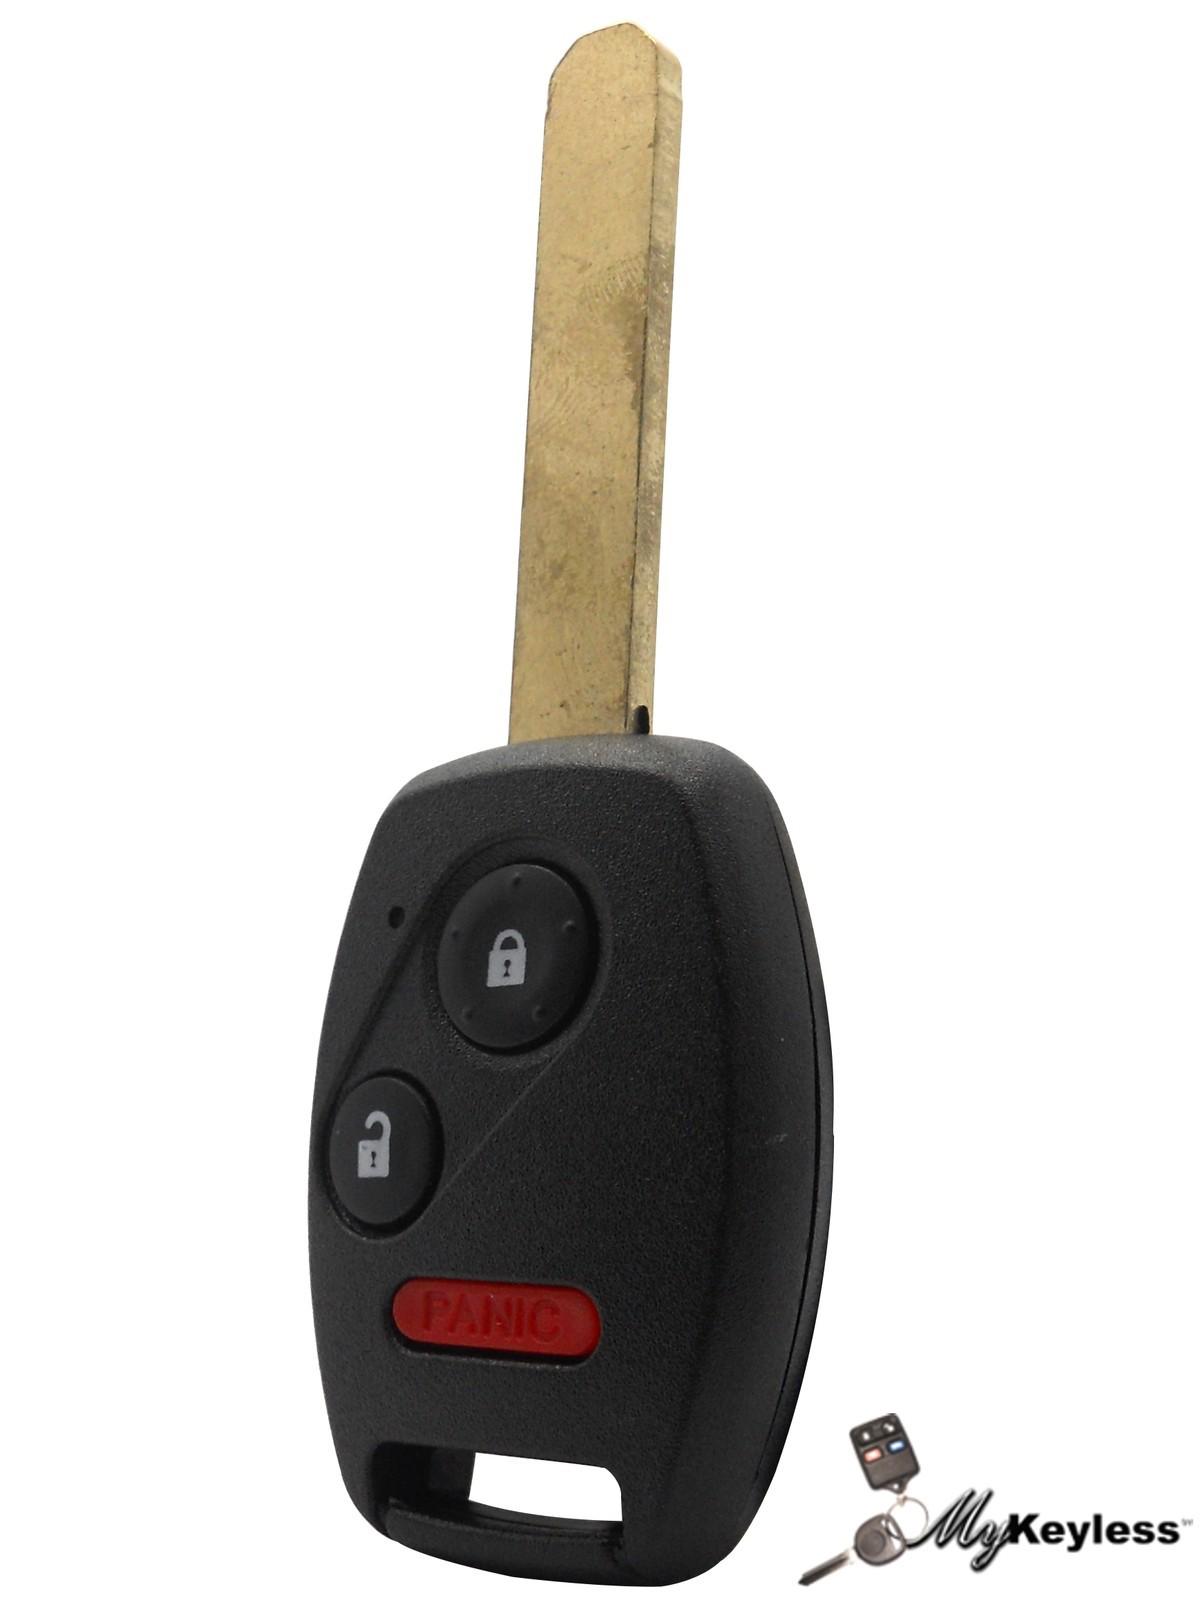 New honda replacement uncut car key keyless entry remote keyfob combo 3 button